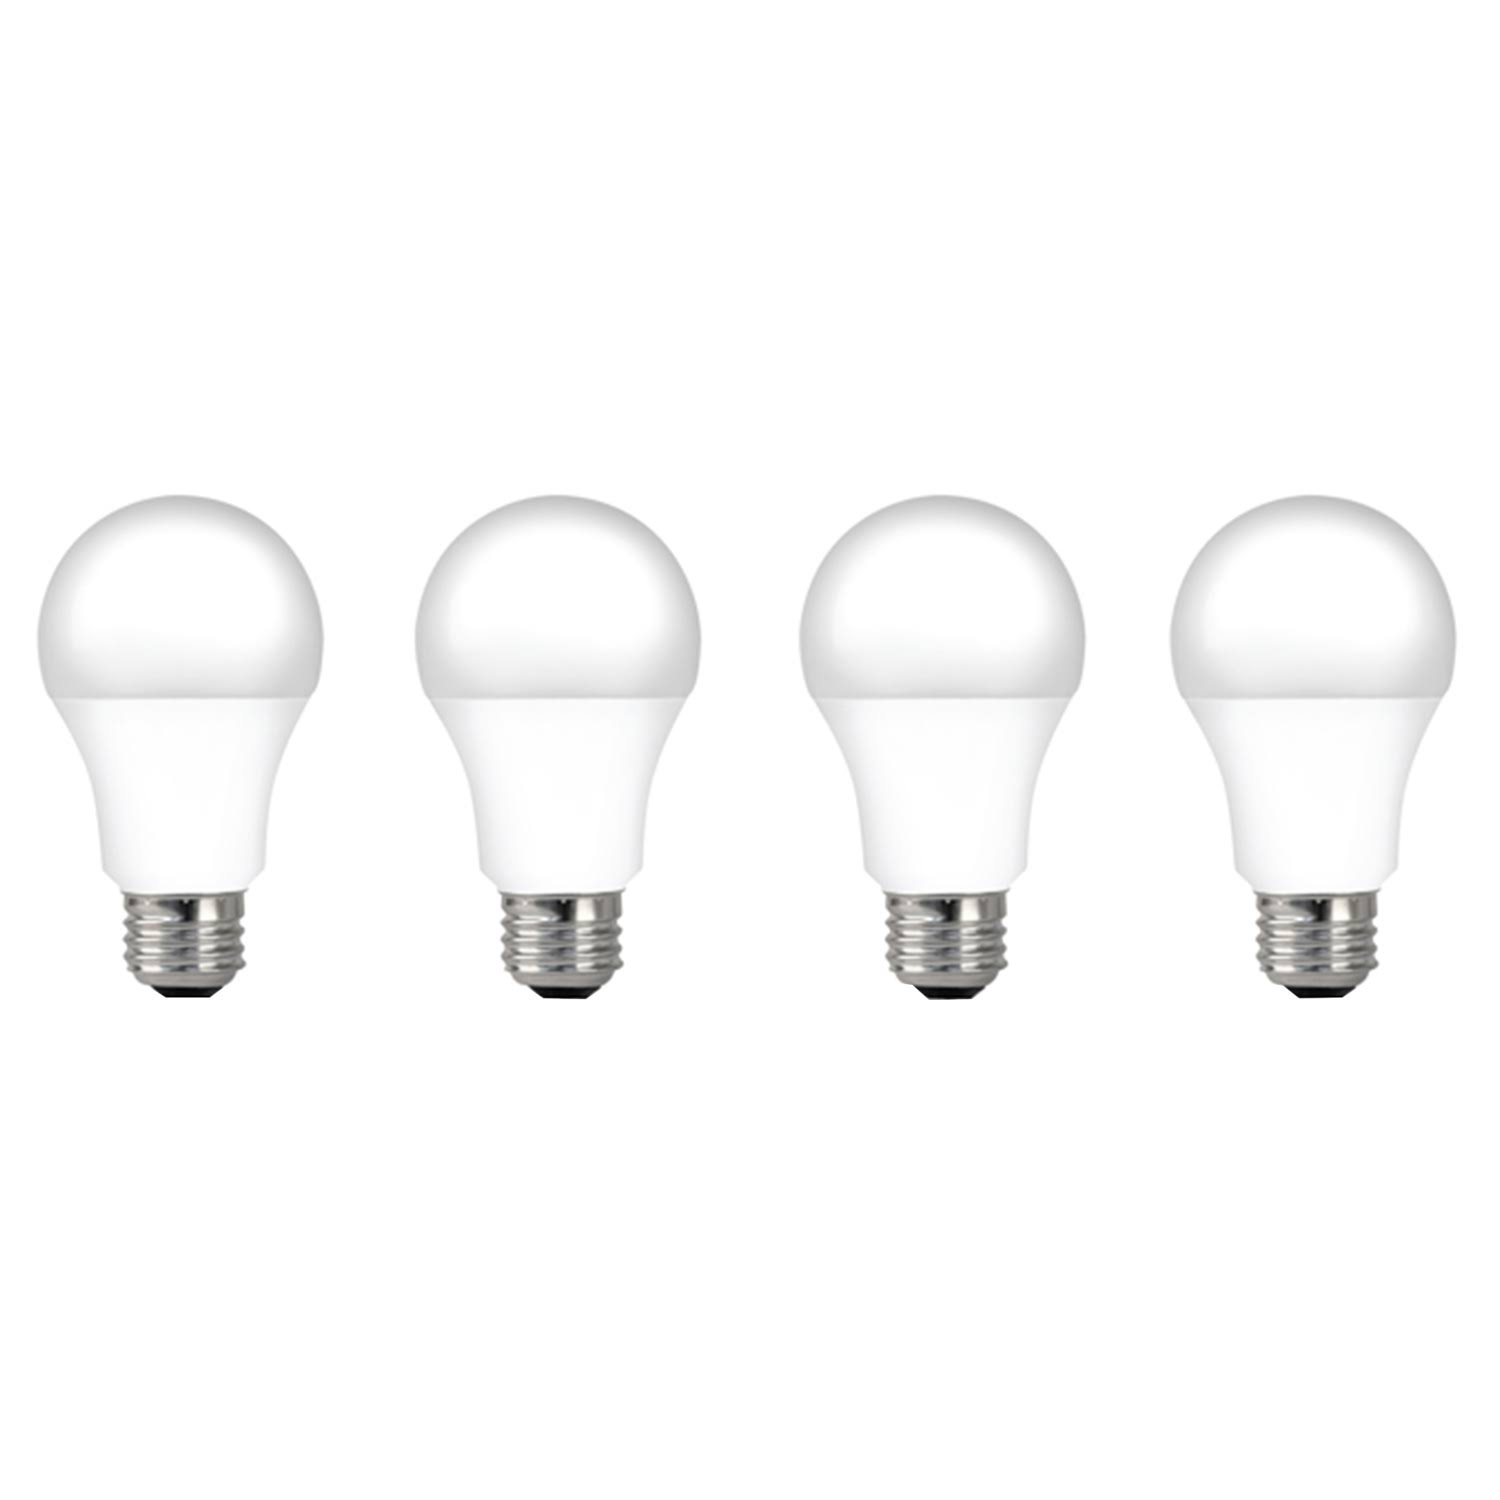 Ace Light Bulbs, LED, Daylight, 9.5 Watts - 4 light bulbs